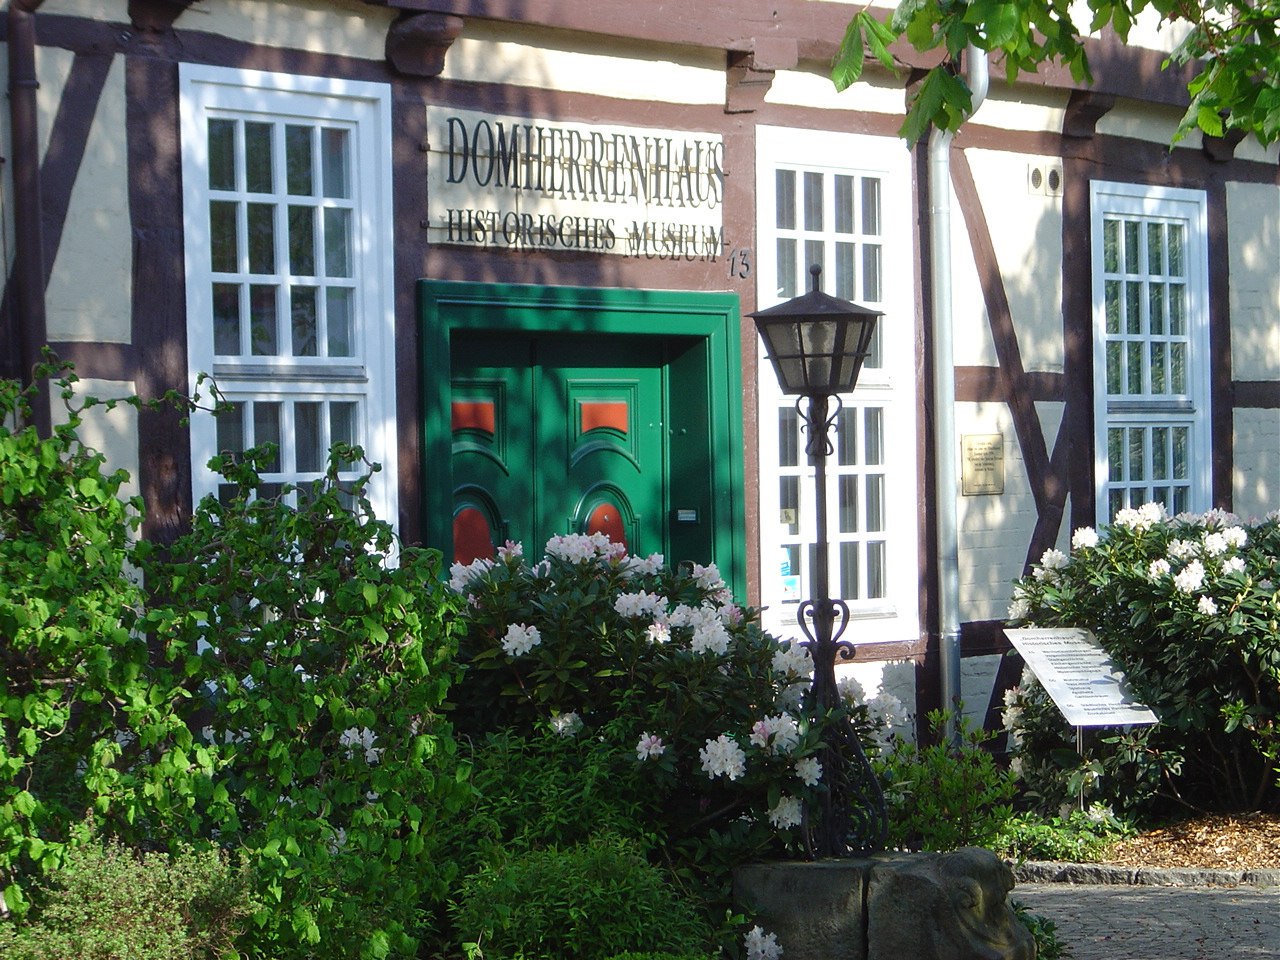 Eingang zum Domherrenhaus, © Historisches Museum Domherrenhaus